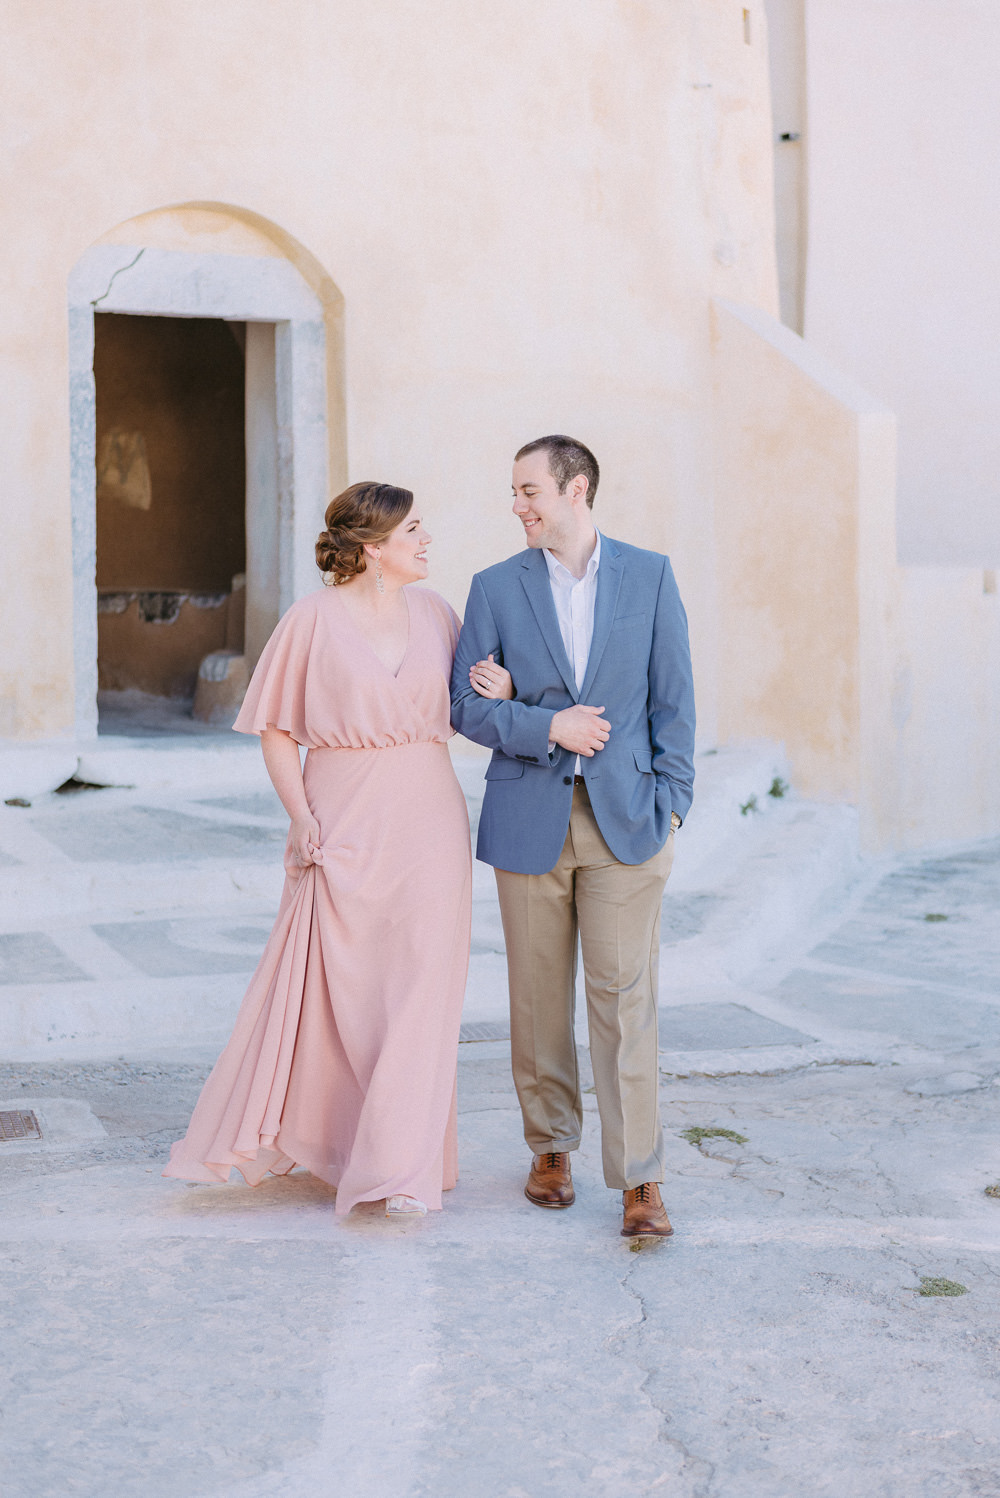 Honeymoon photoshoot in Santorini